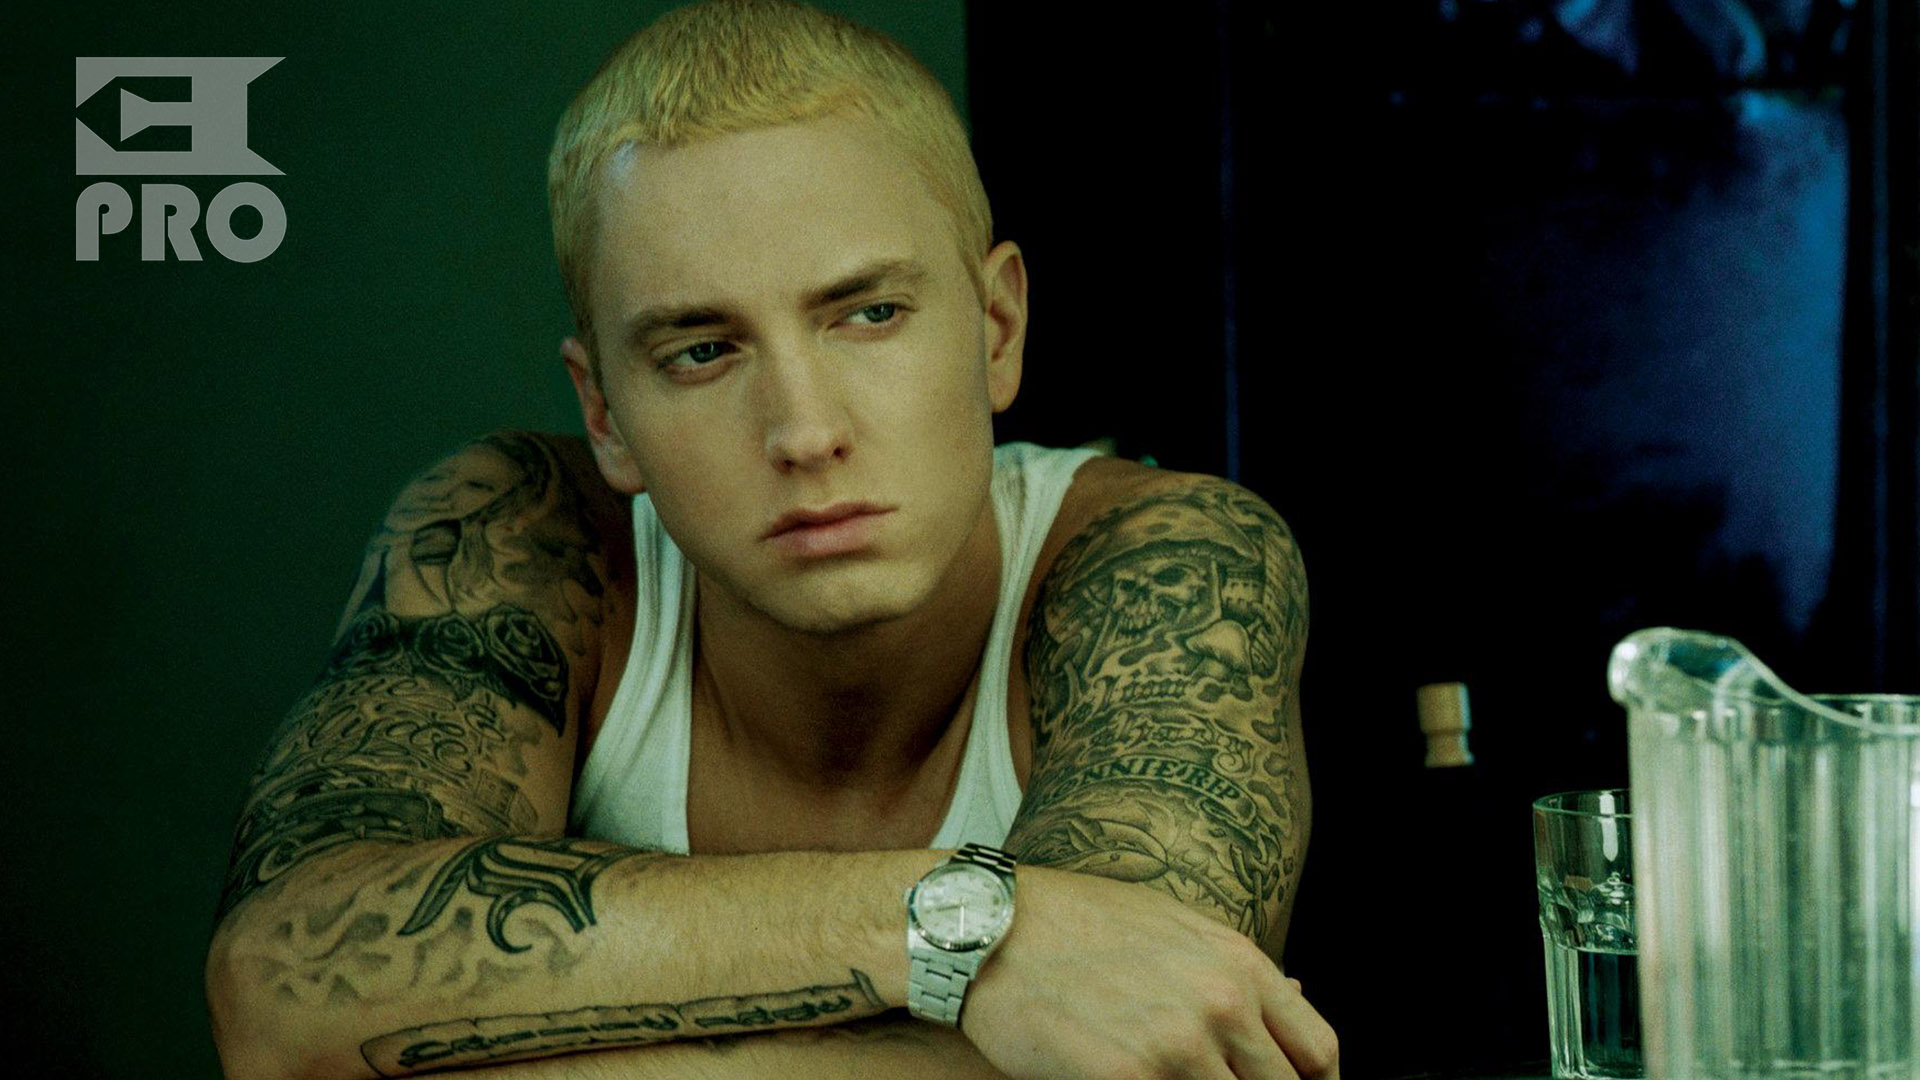 Eminem’s “Encore” Has Reached 900 Million Streams on Spotify